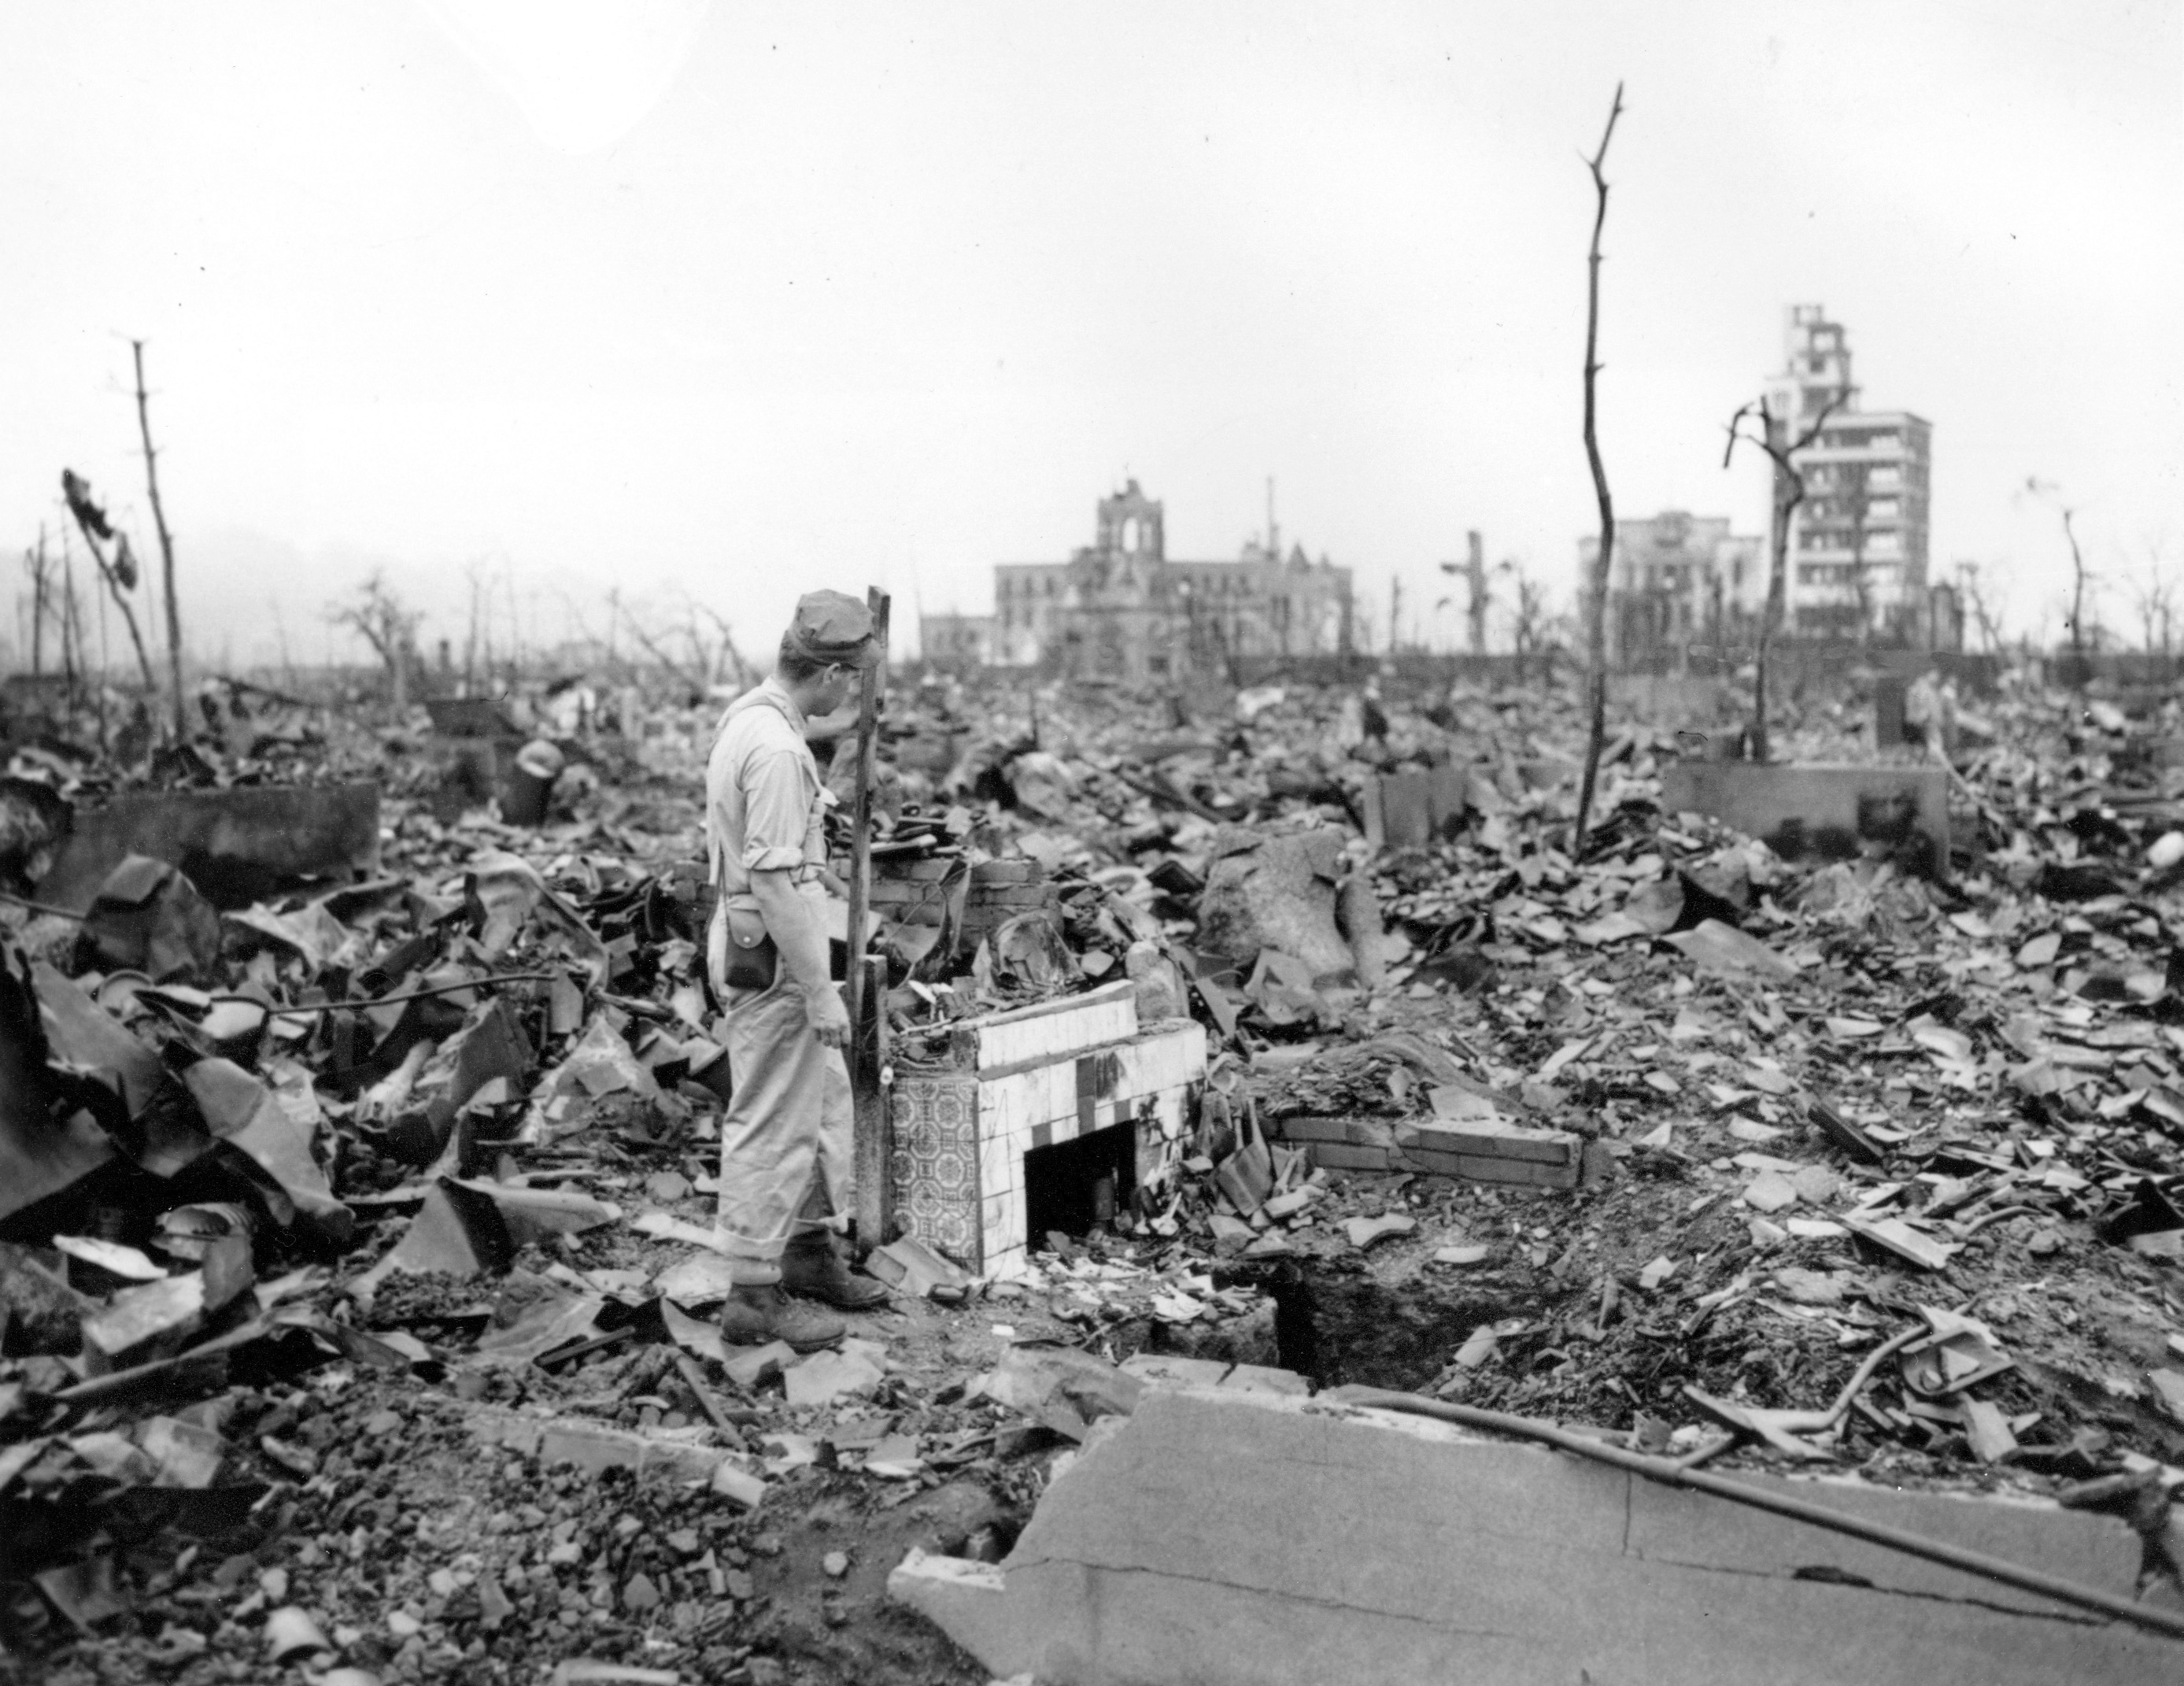 atomic bomb aftermath